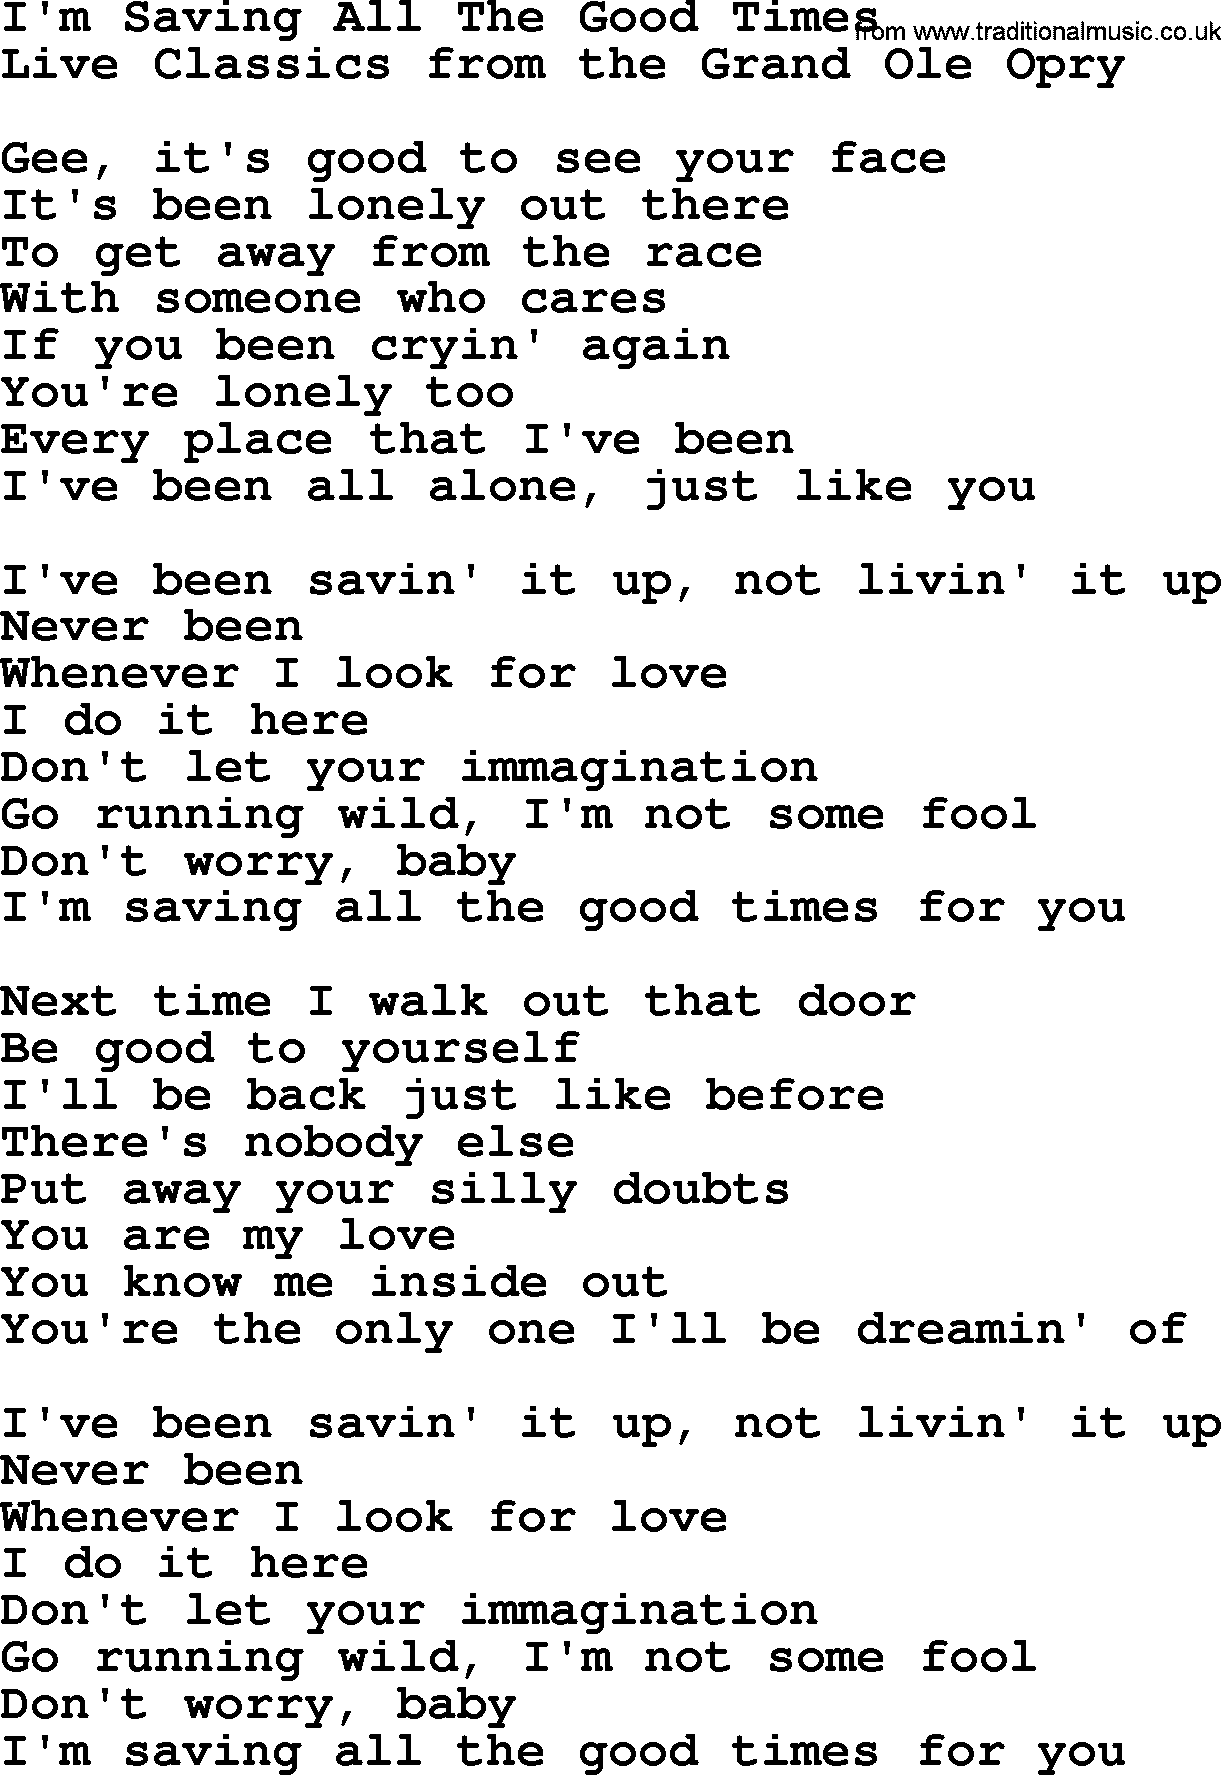 Marty Robbins song: I'm Saving All The Good Times, lyrics